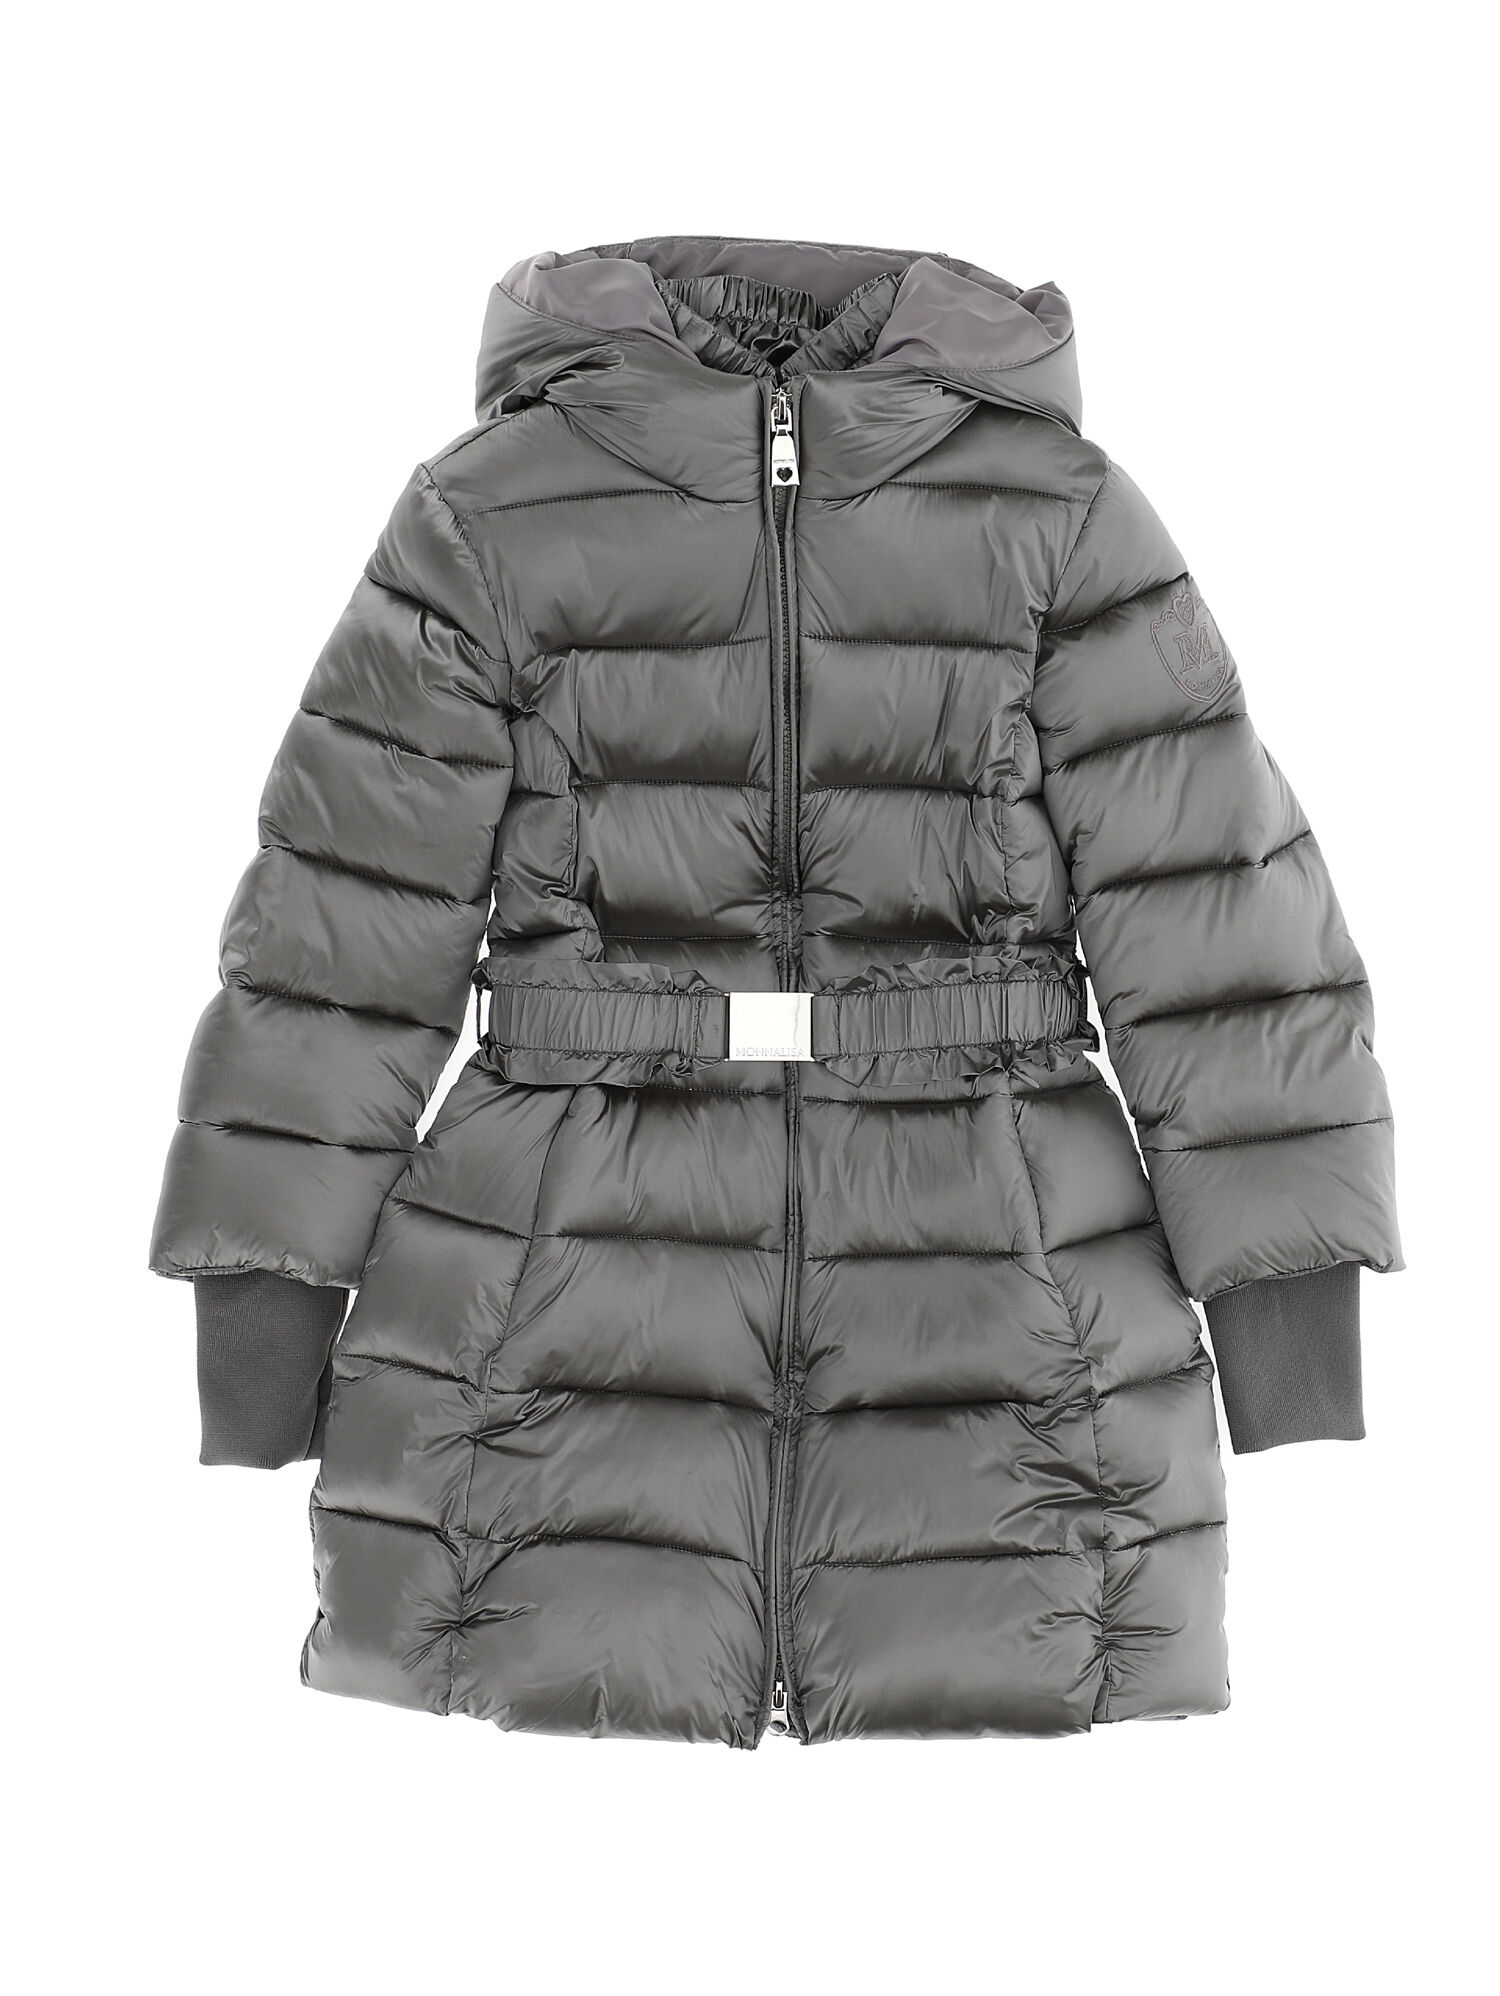 Nylon jacket with a hood Monnalisa Girls Clothing Jackets Rainwear 